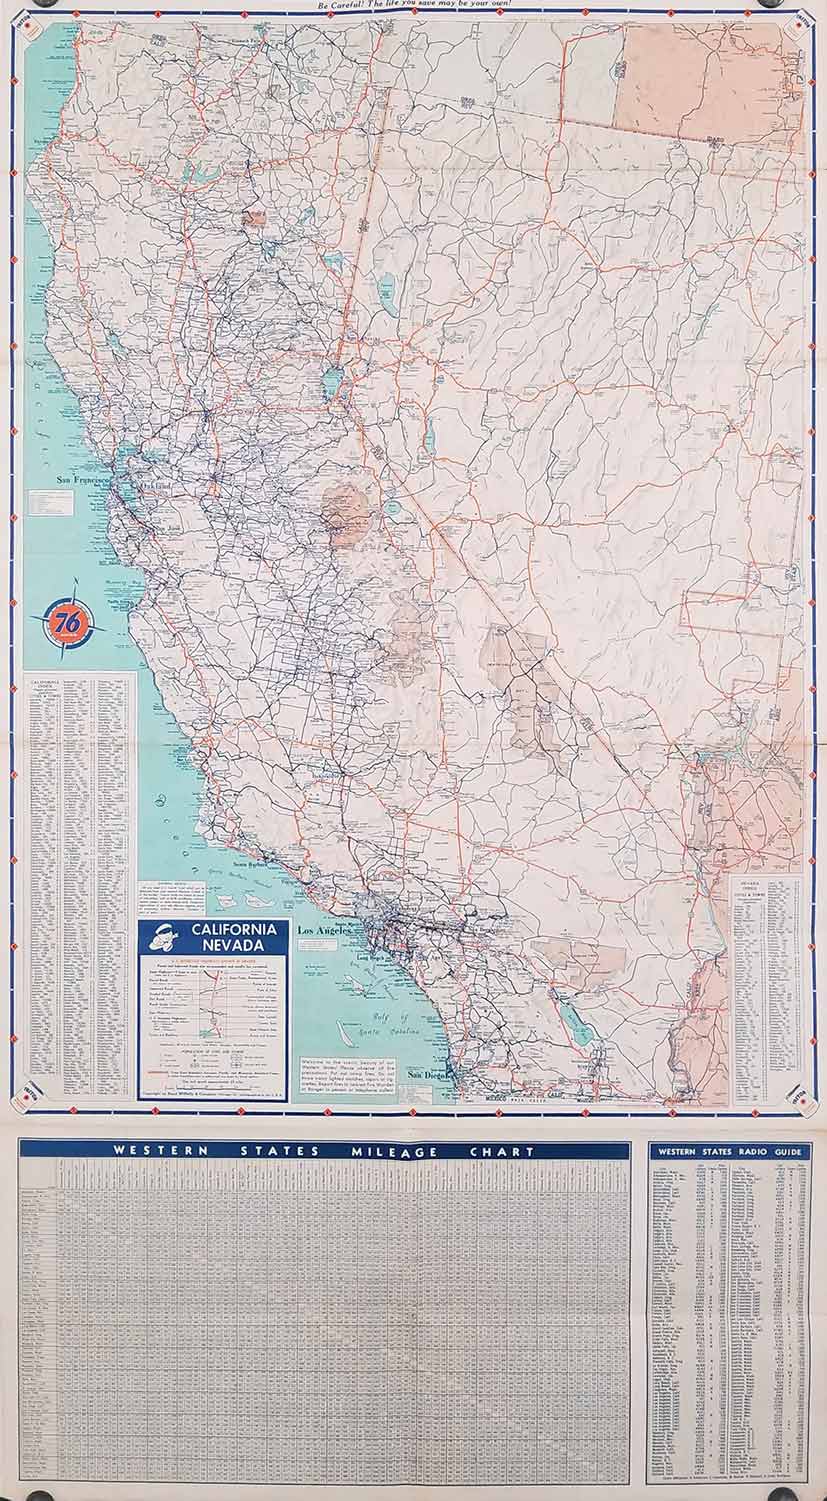 California Mileage Chart